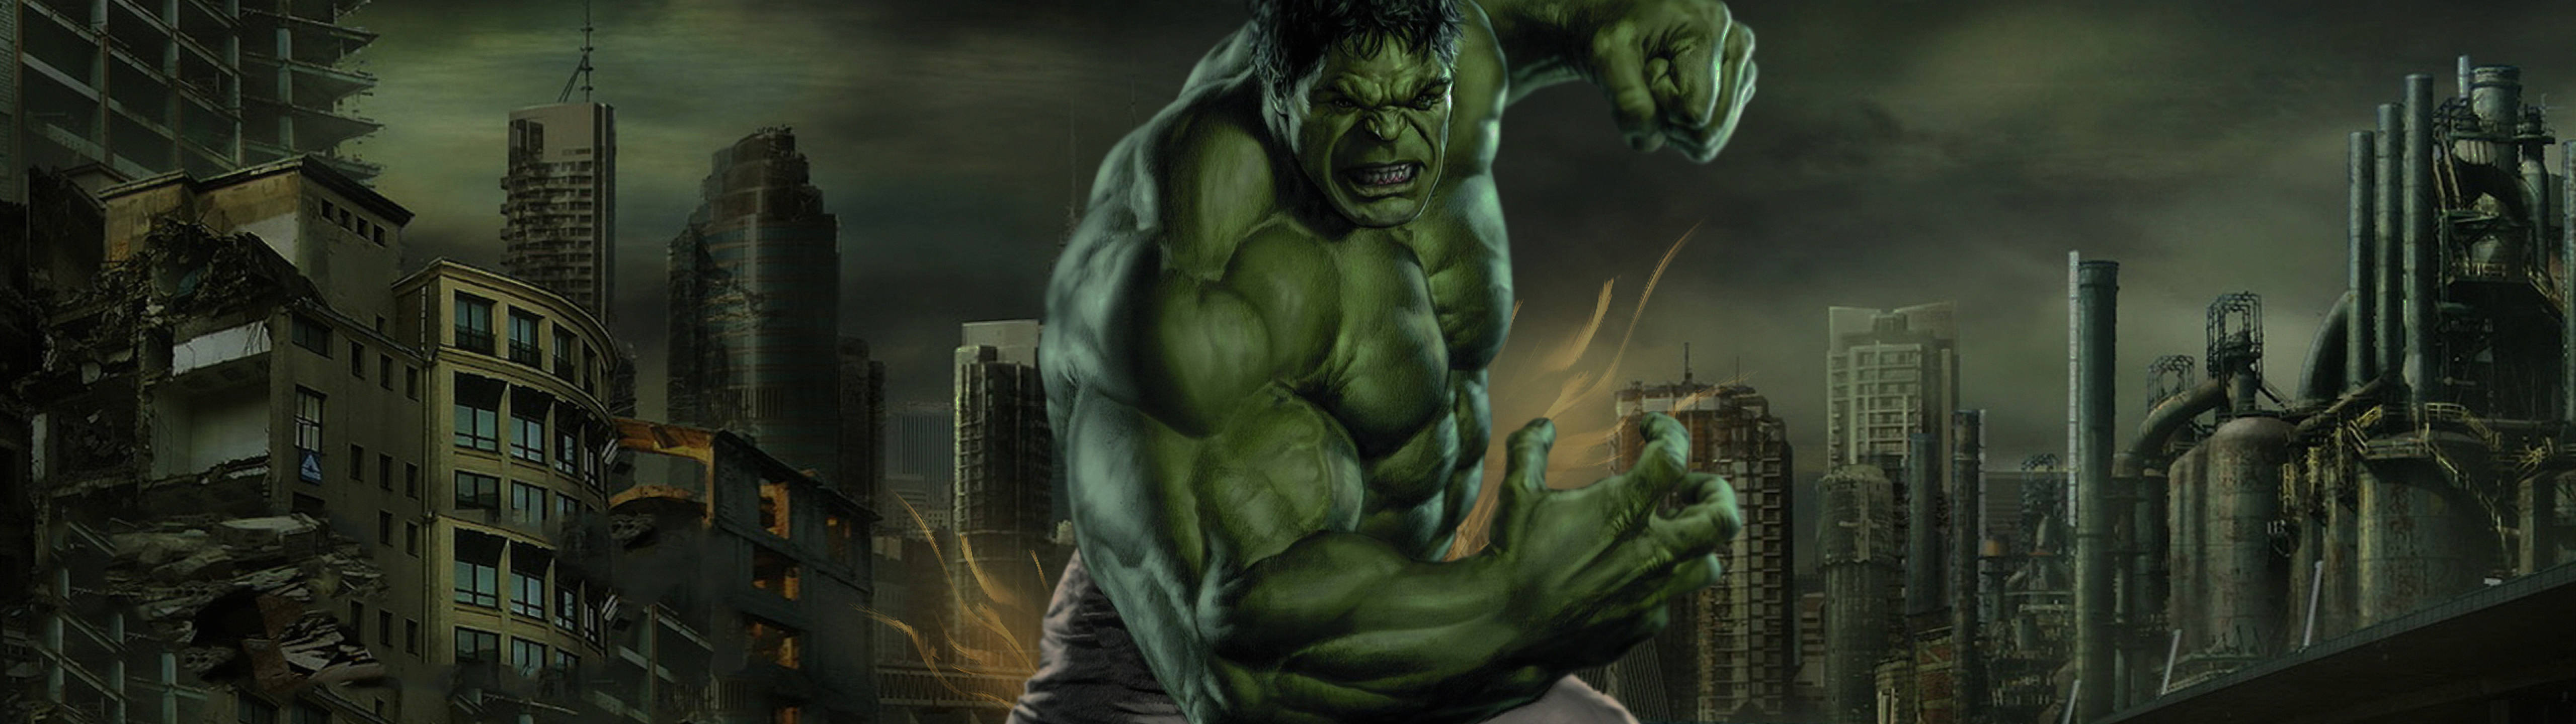 Marvel's Hulk 5120 X 1440 Wallpaper